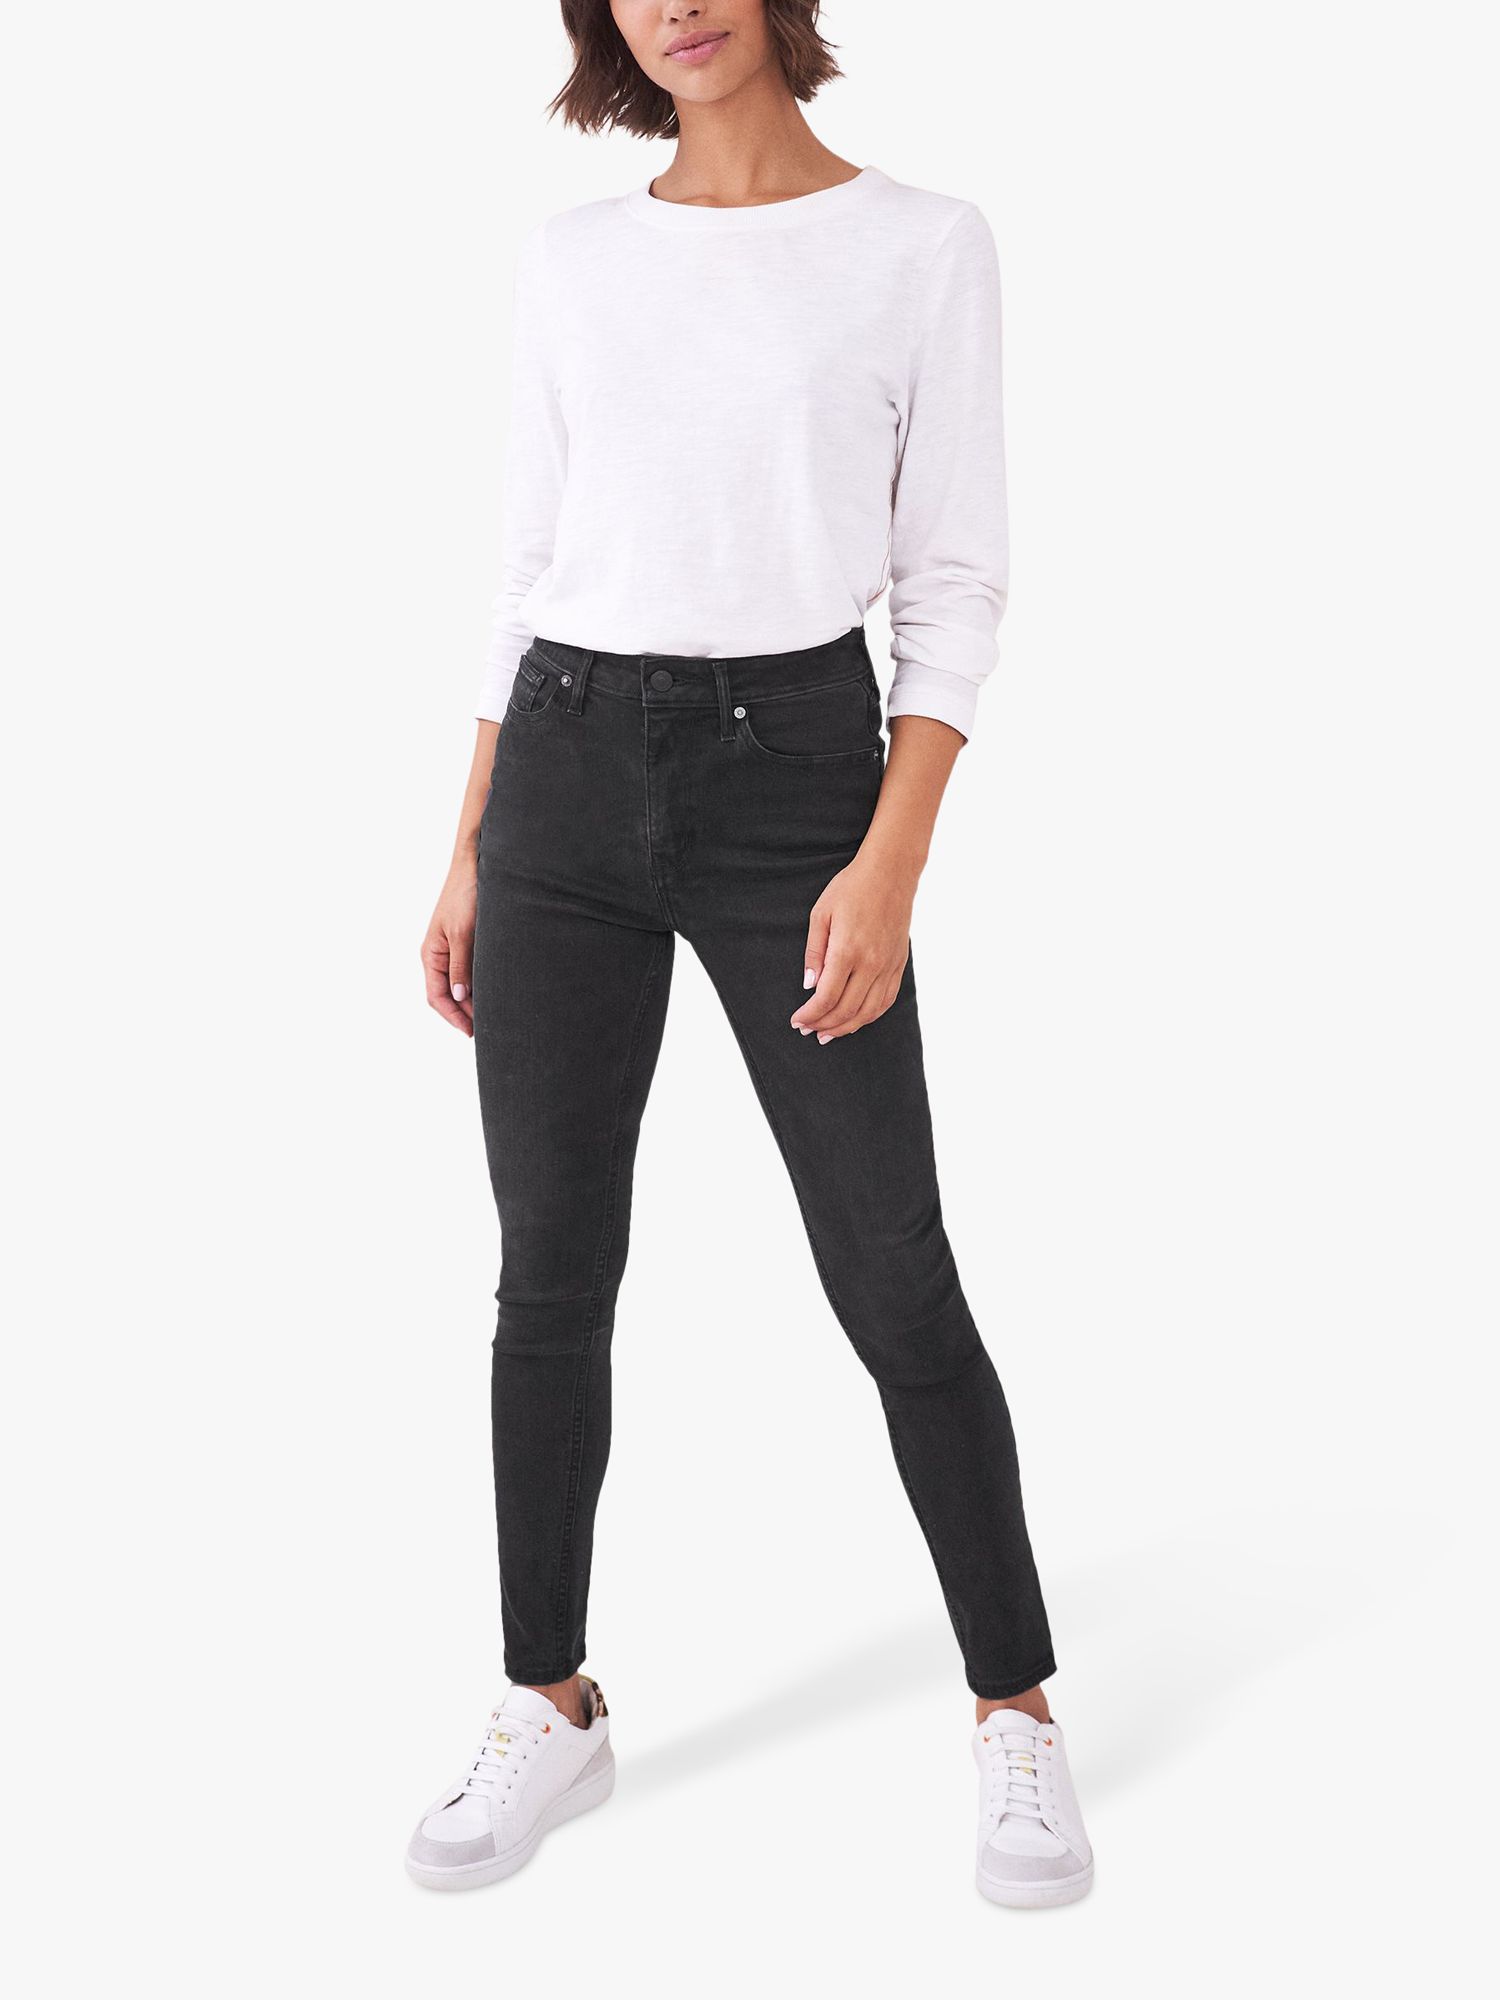 White Stuff Amelia Skinny Jeans, Black, 6S